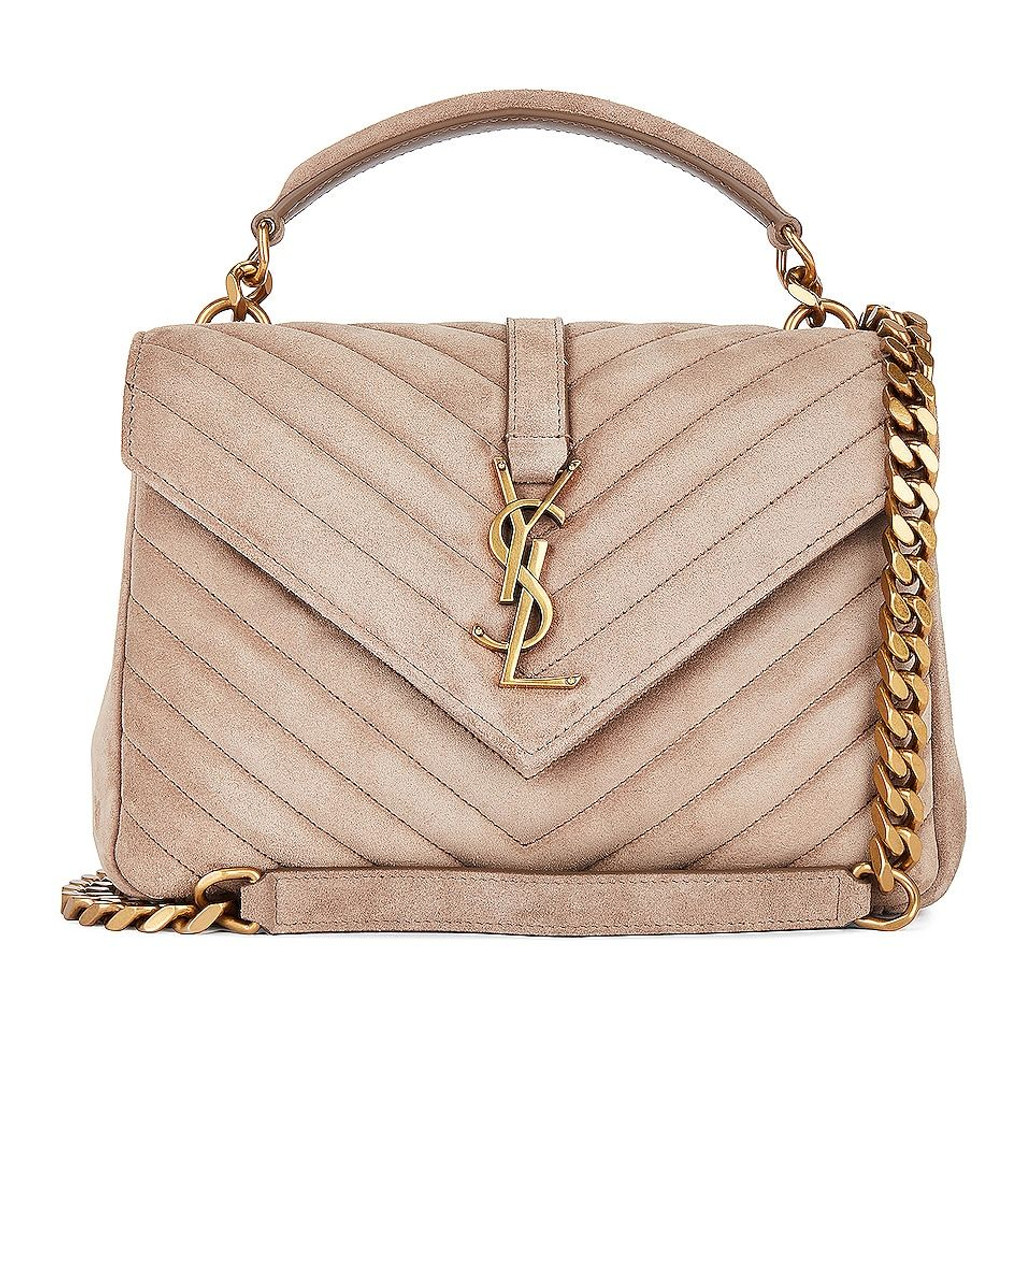 Yves Saint Laurent Medium Envelope Bag, One Year Updated Review